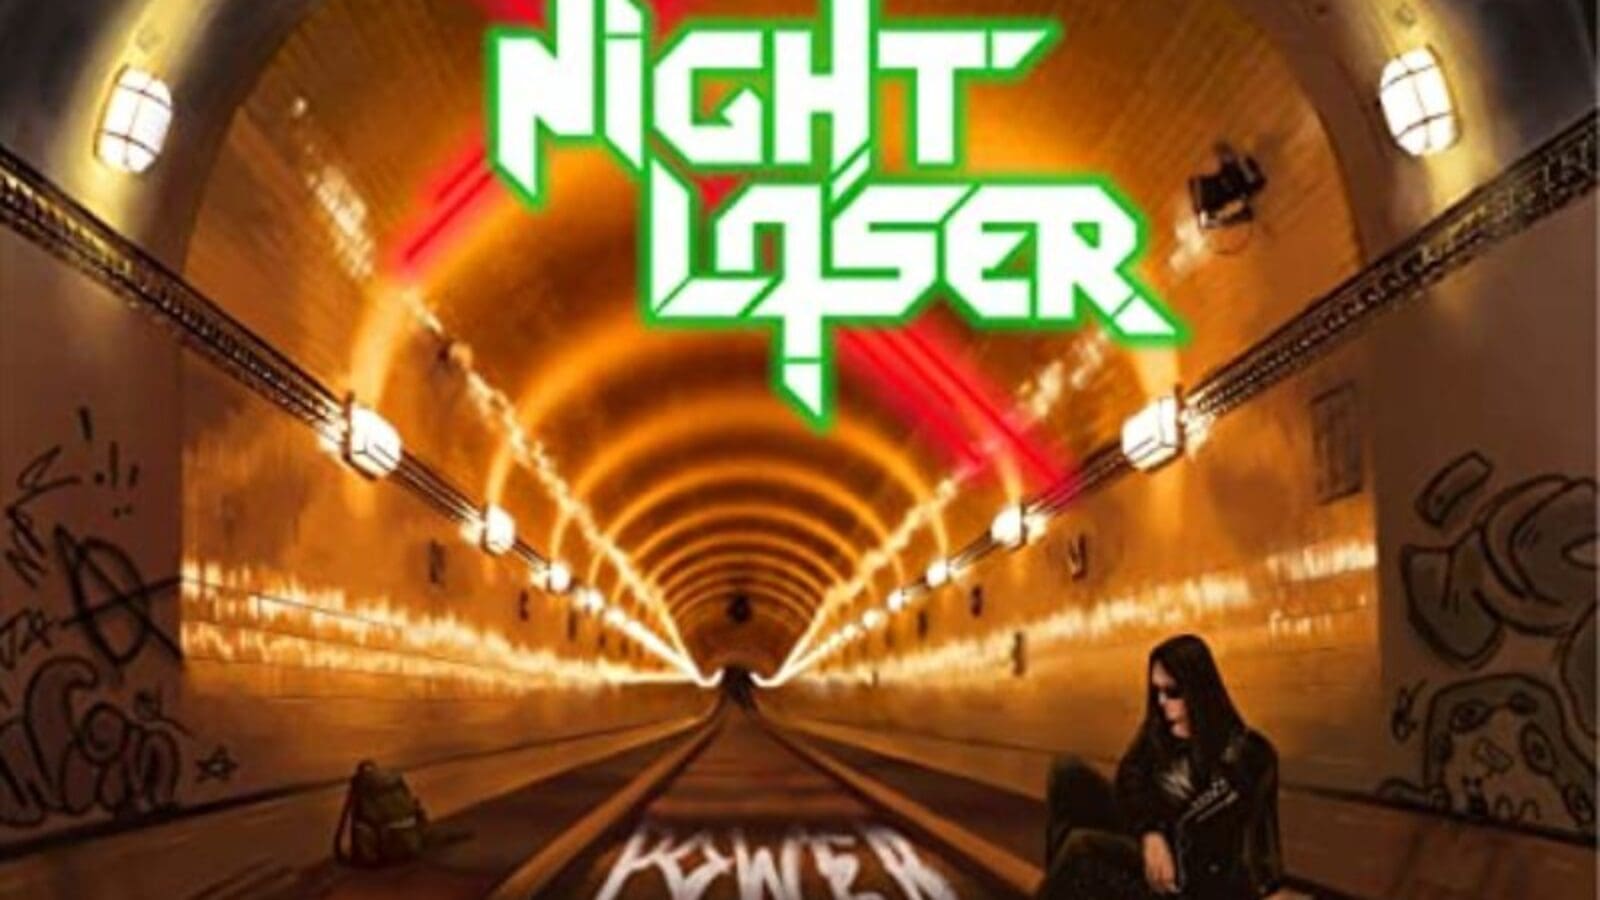 Neue Musik: Biffy Clyro, Anthrax, Night Laser & Cee-Lo Green